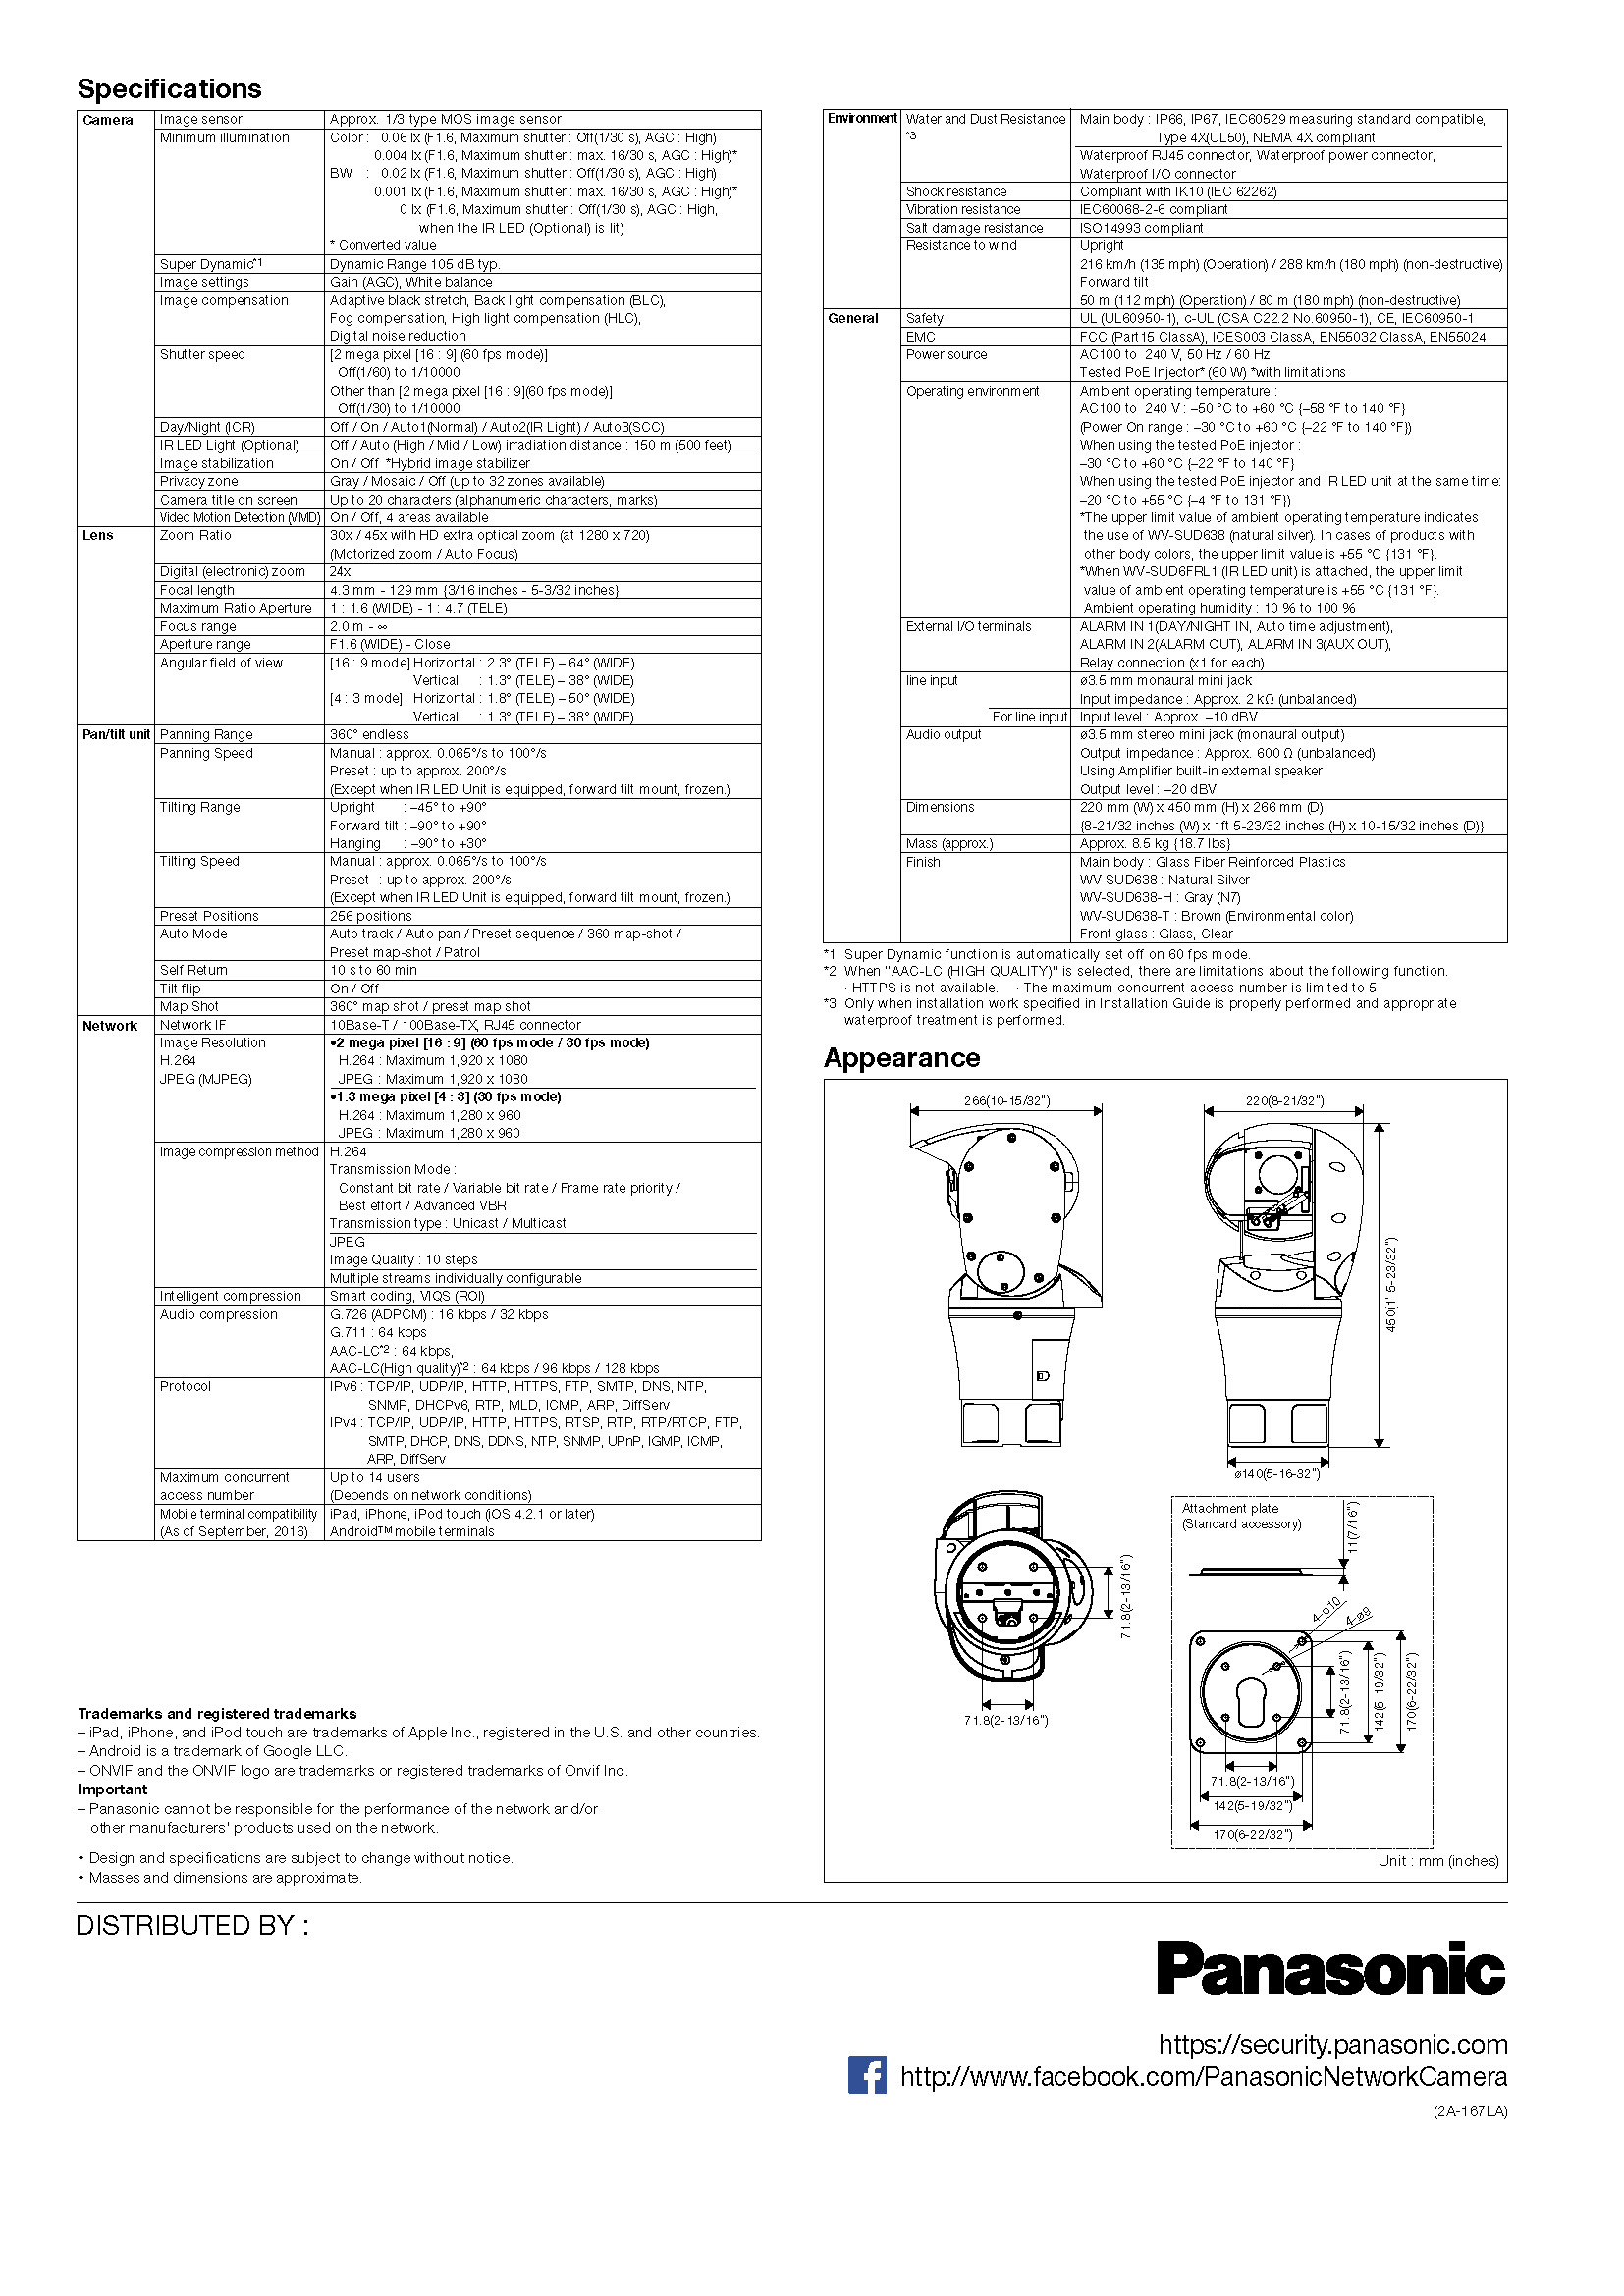 Panasonic WV-SUD638 Spec